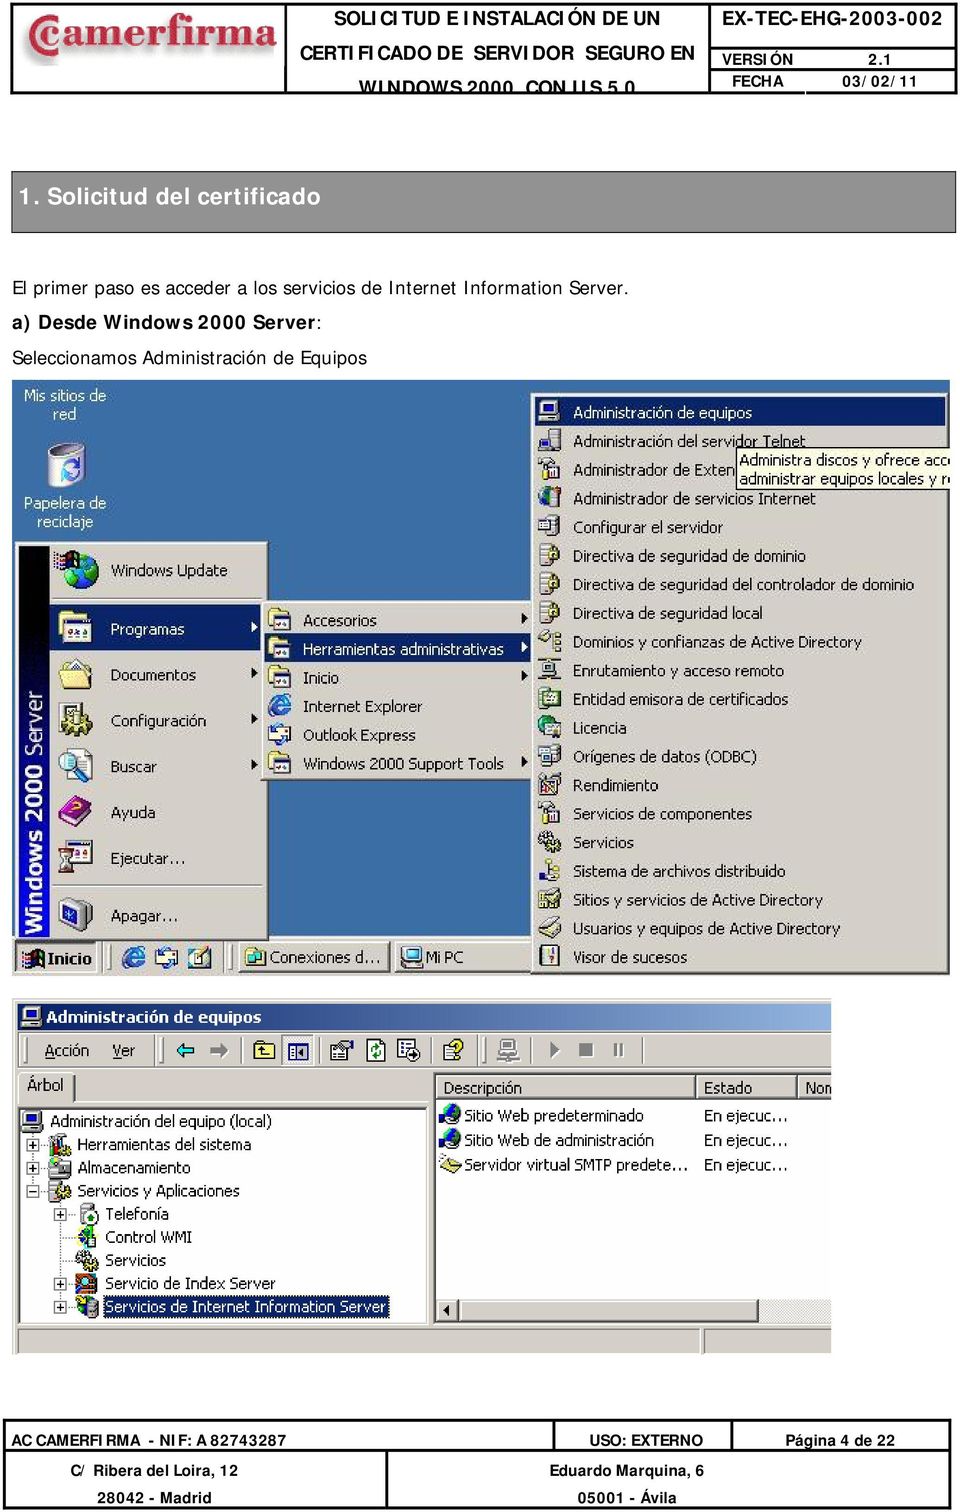 a) Desde Windows 2000 Server: Seleccionamos